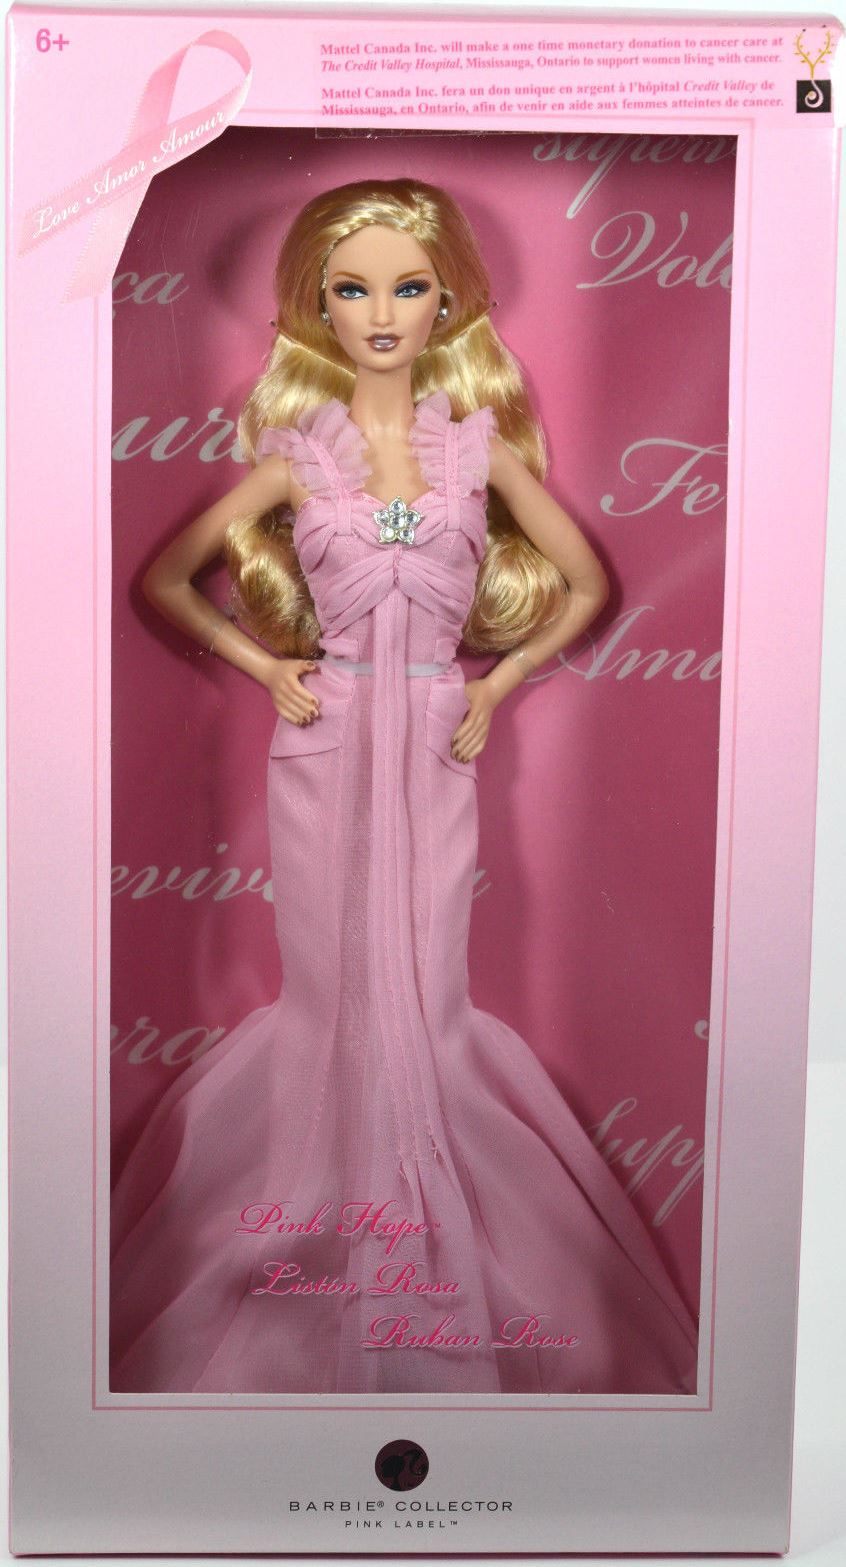 hope barbie cancer doll